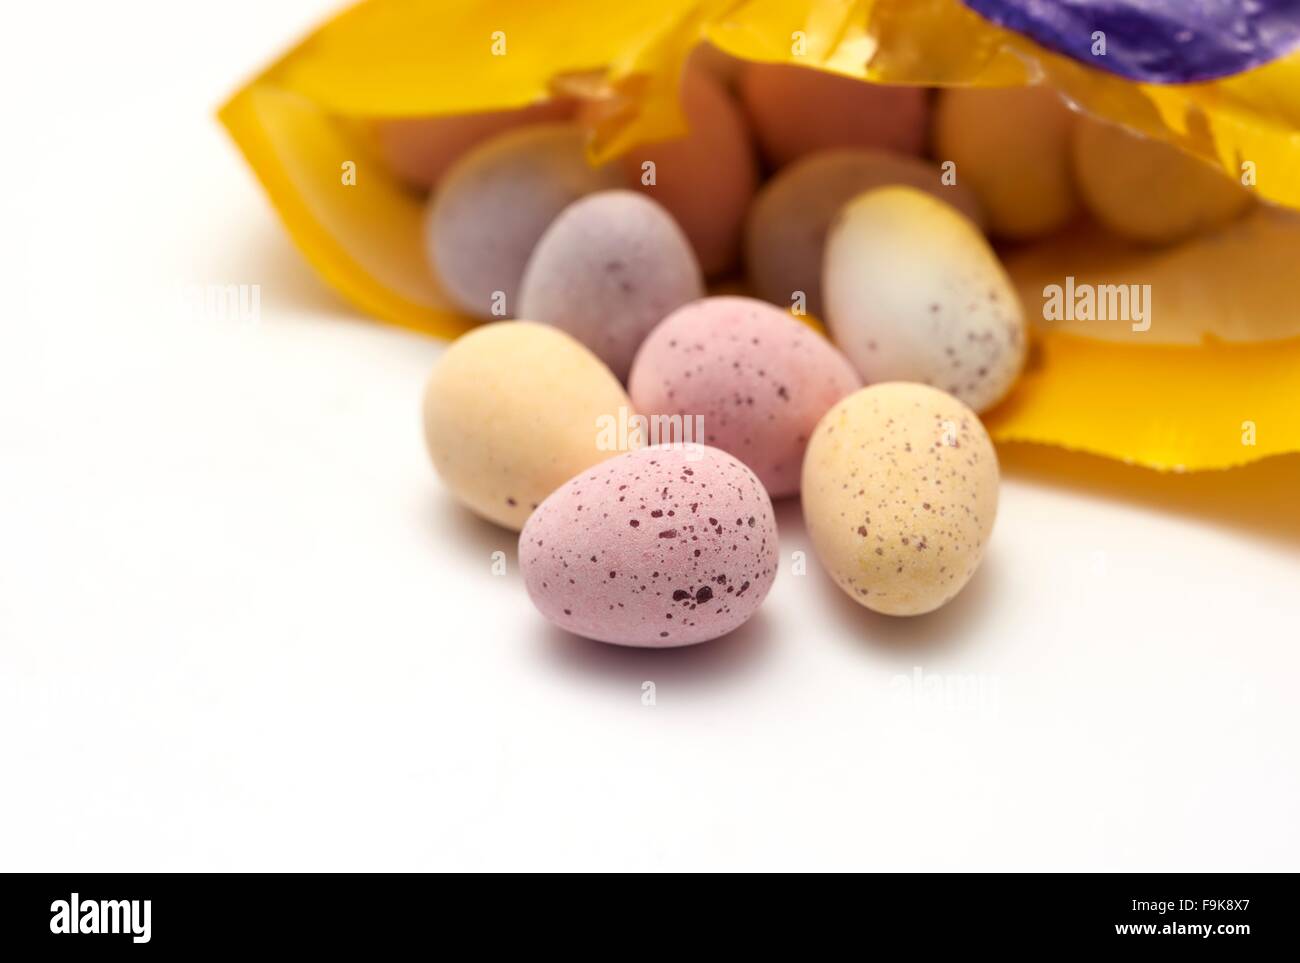 Cadburys Mini Eggs Stock Photos & Cadburys Mini Eggs Stock ...